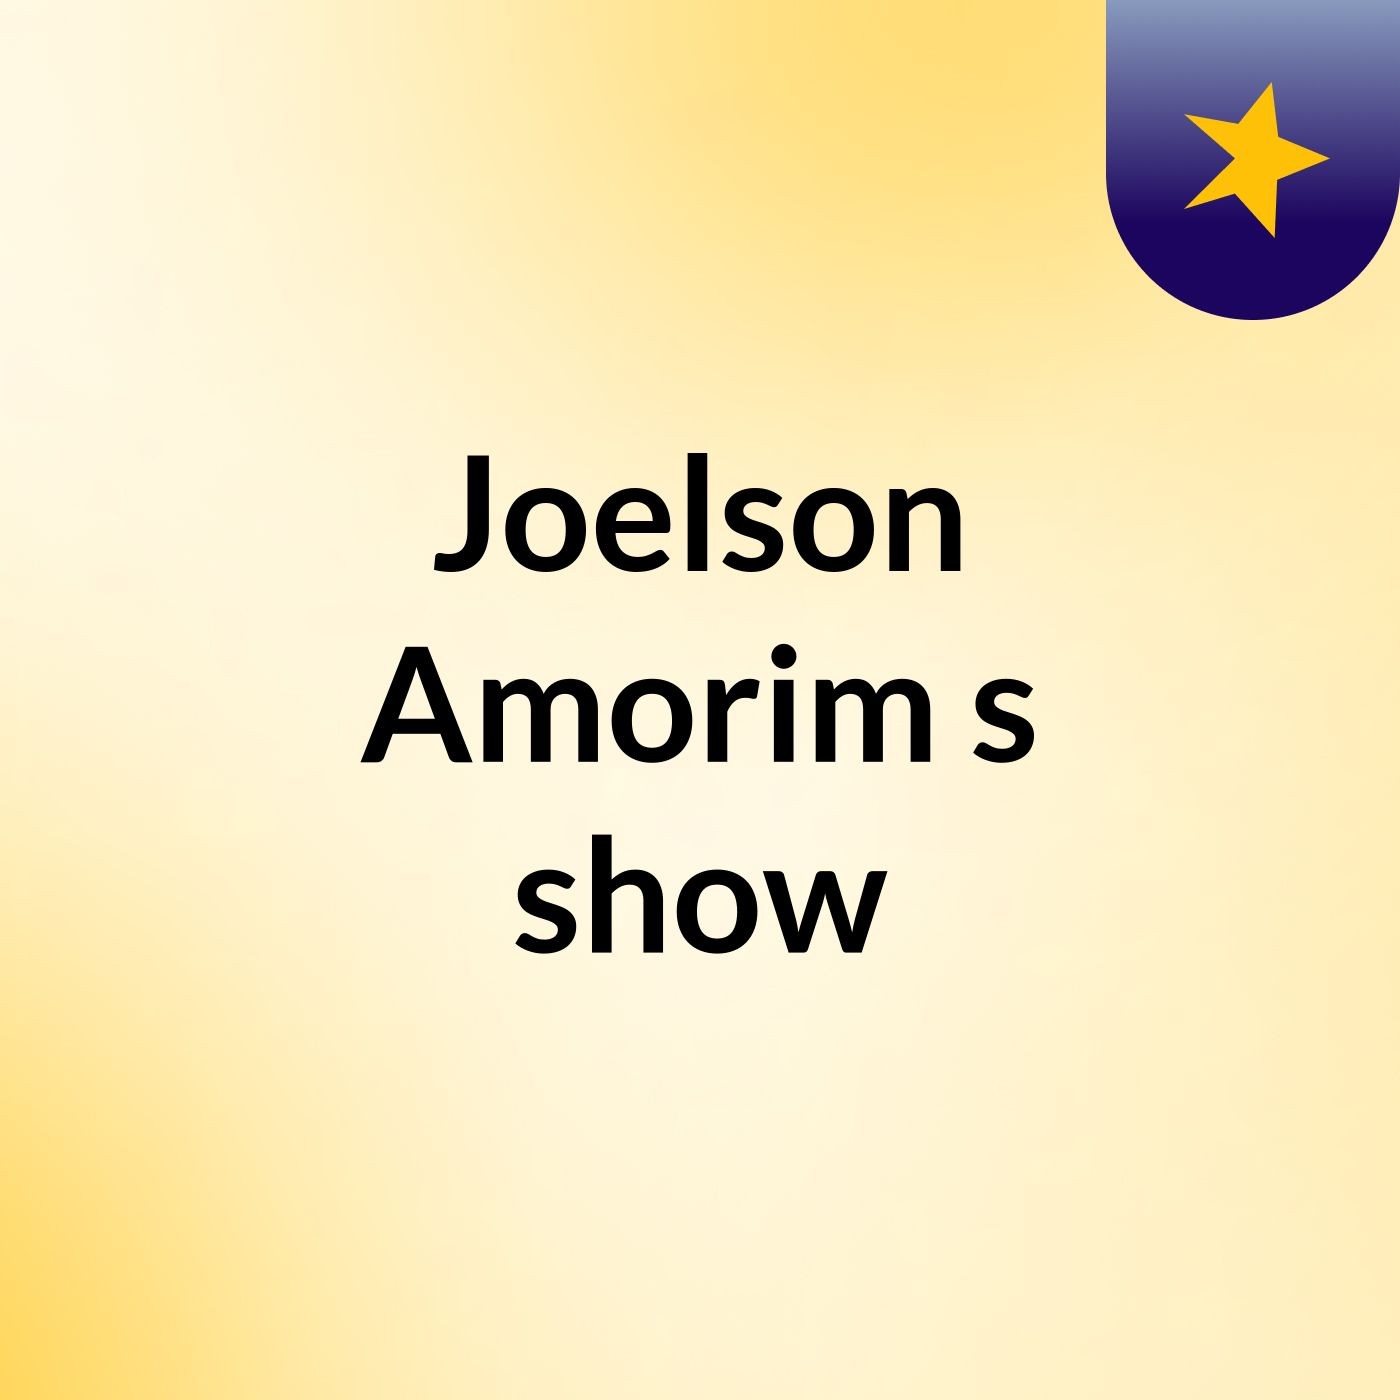 Joelson Amorim's show